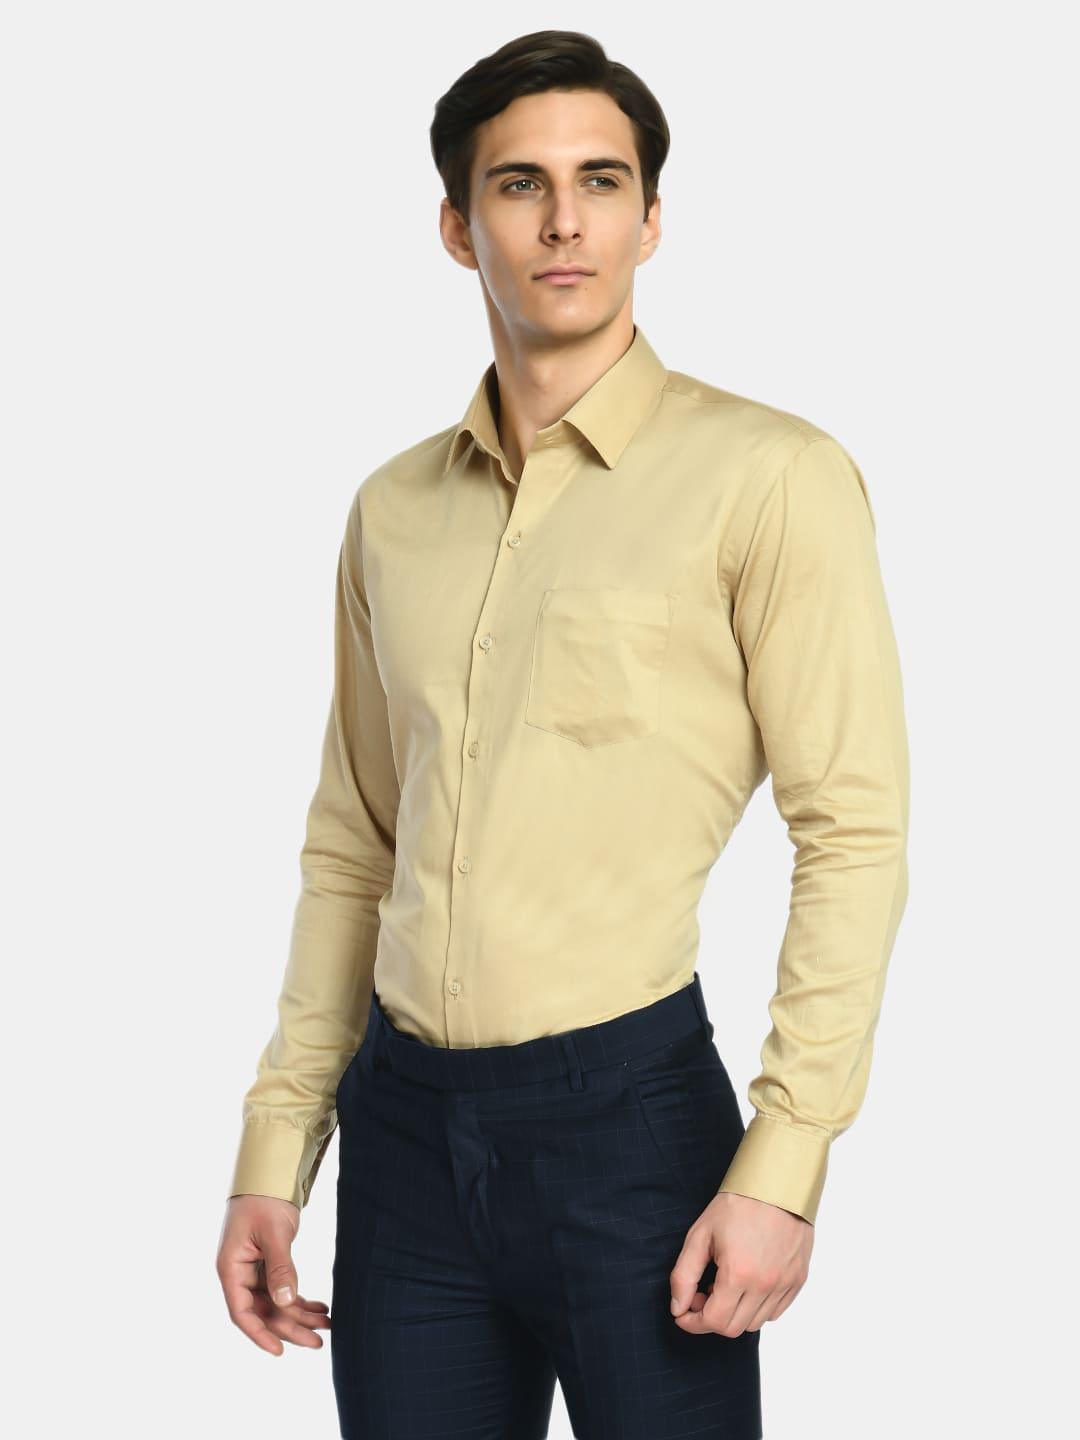 Men's Fawn Spread Collar Solid Formal Shirt